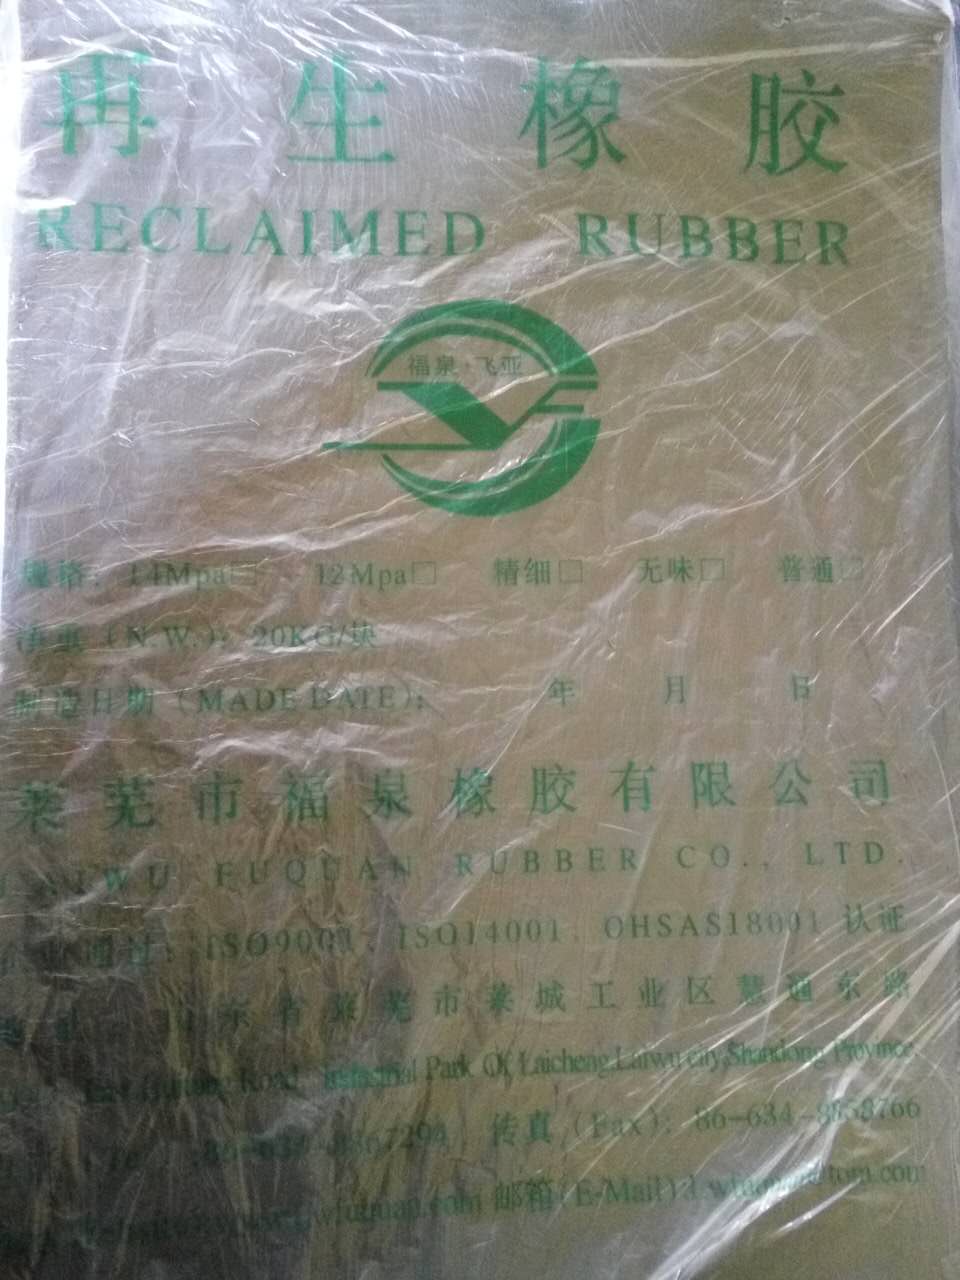 Reclaimed rubber